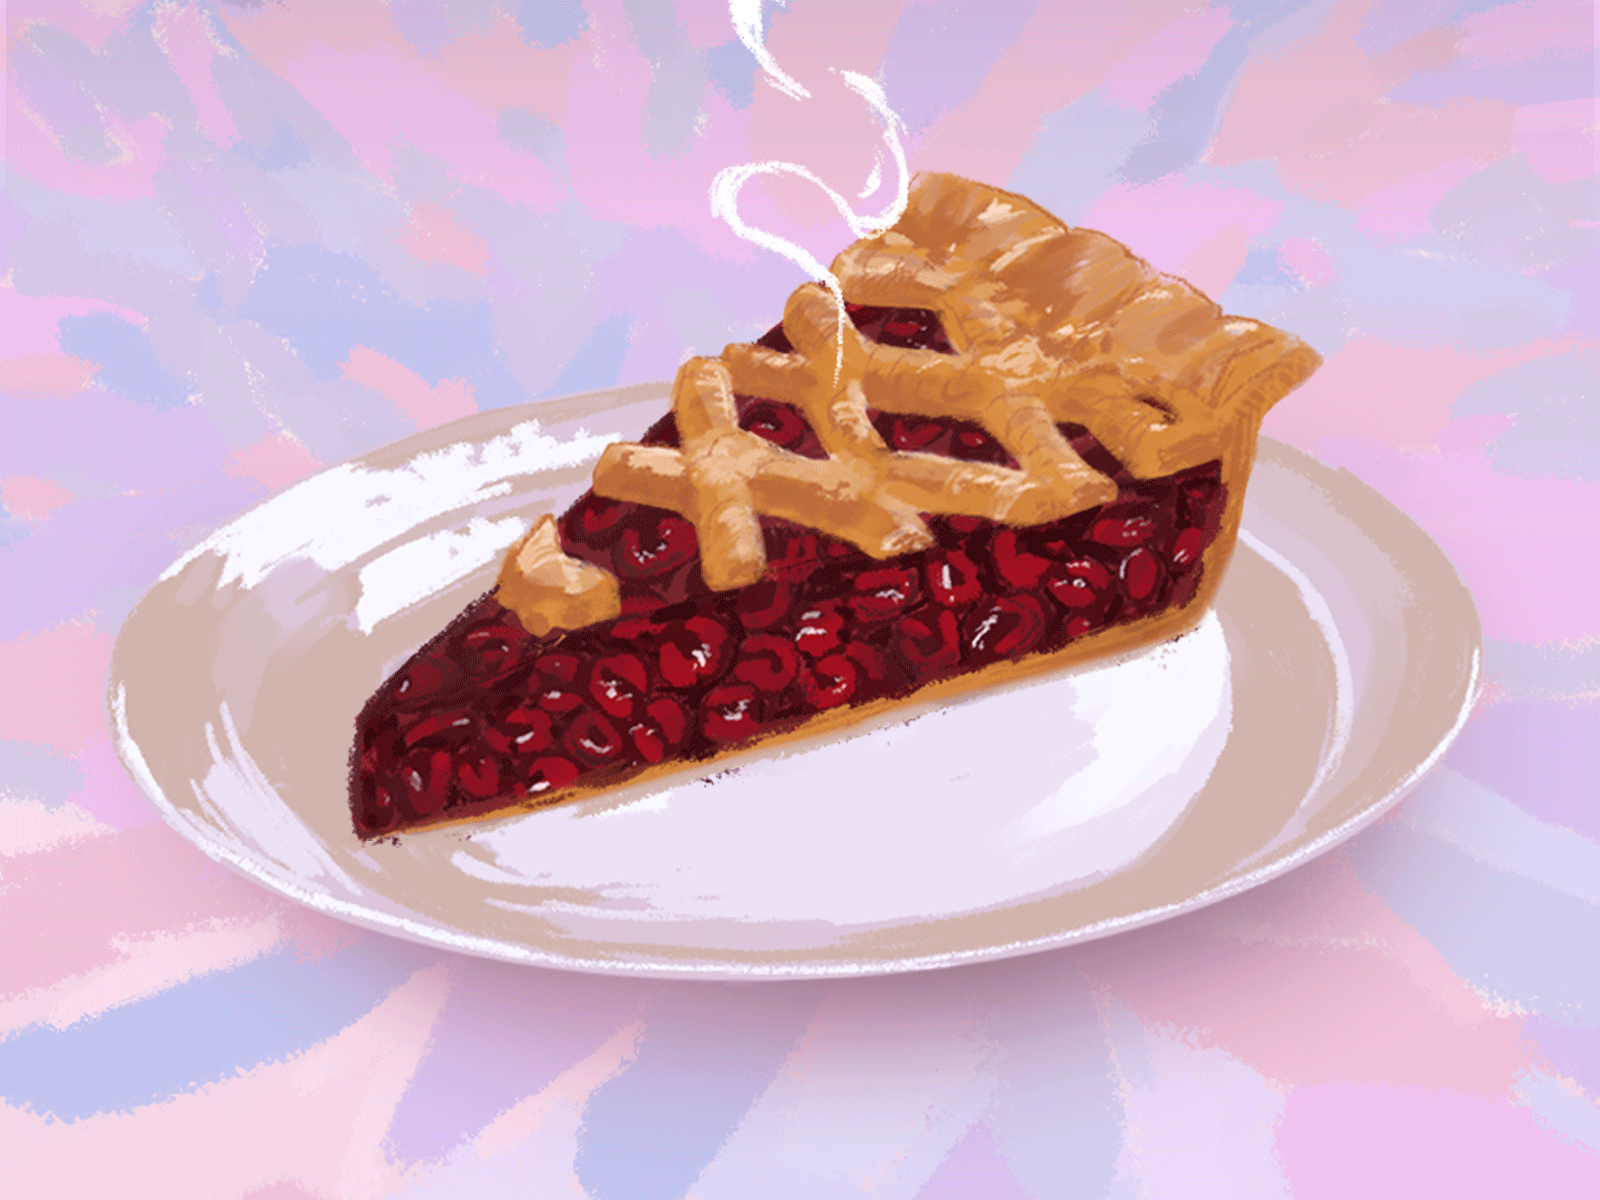 Cherry Pie By Nastaran Moradi On Dribbble